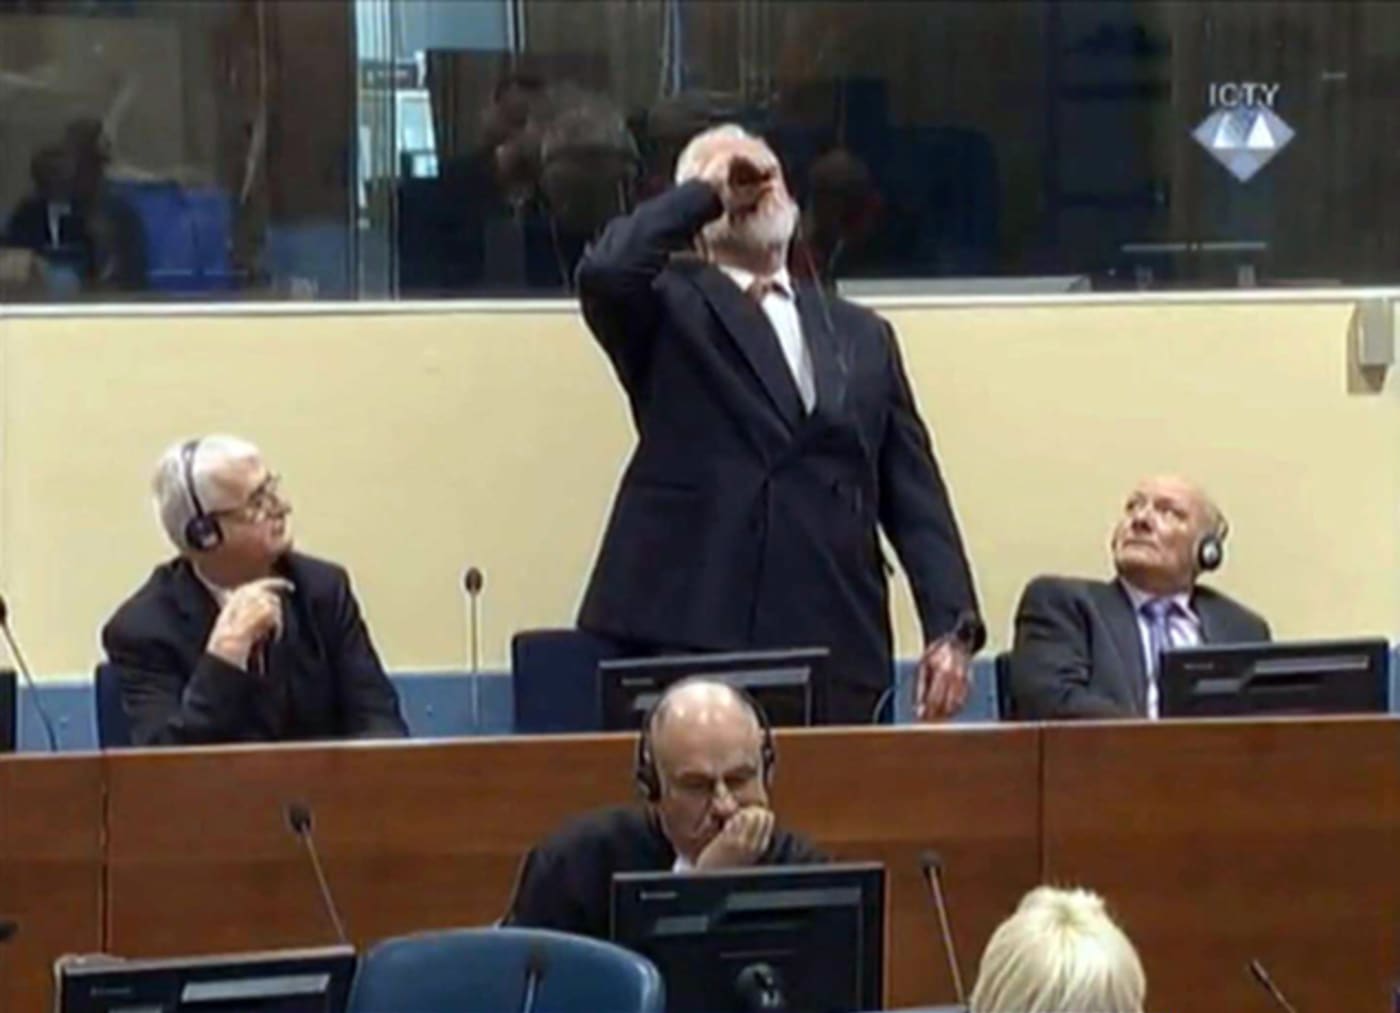 Slobodan Praljak claims to drink poison in Court